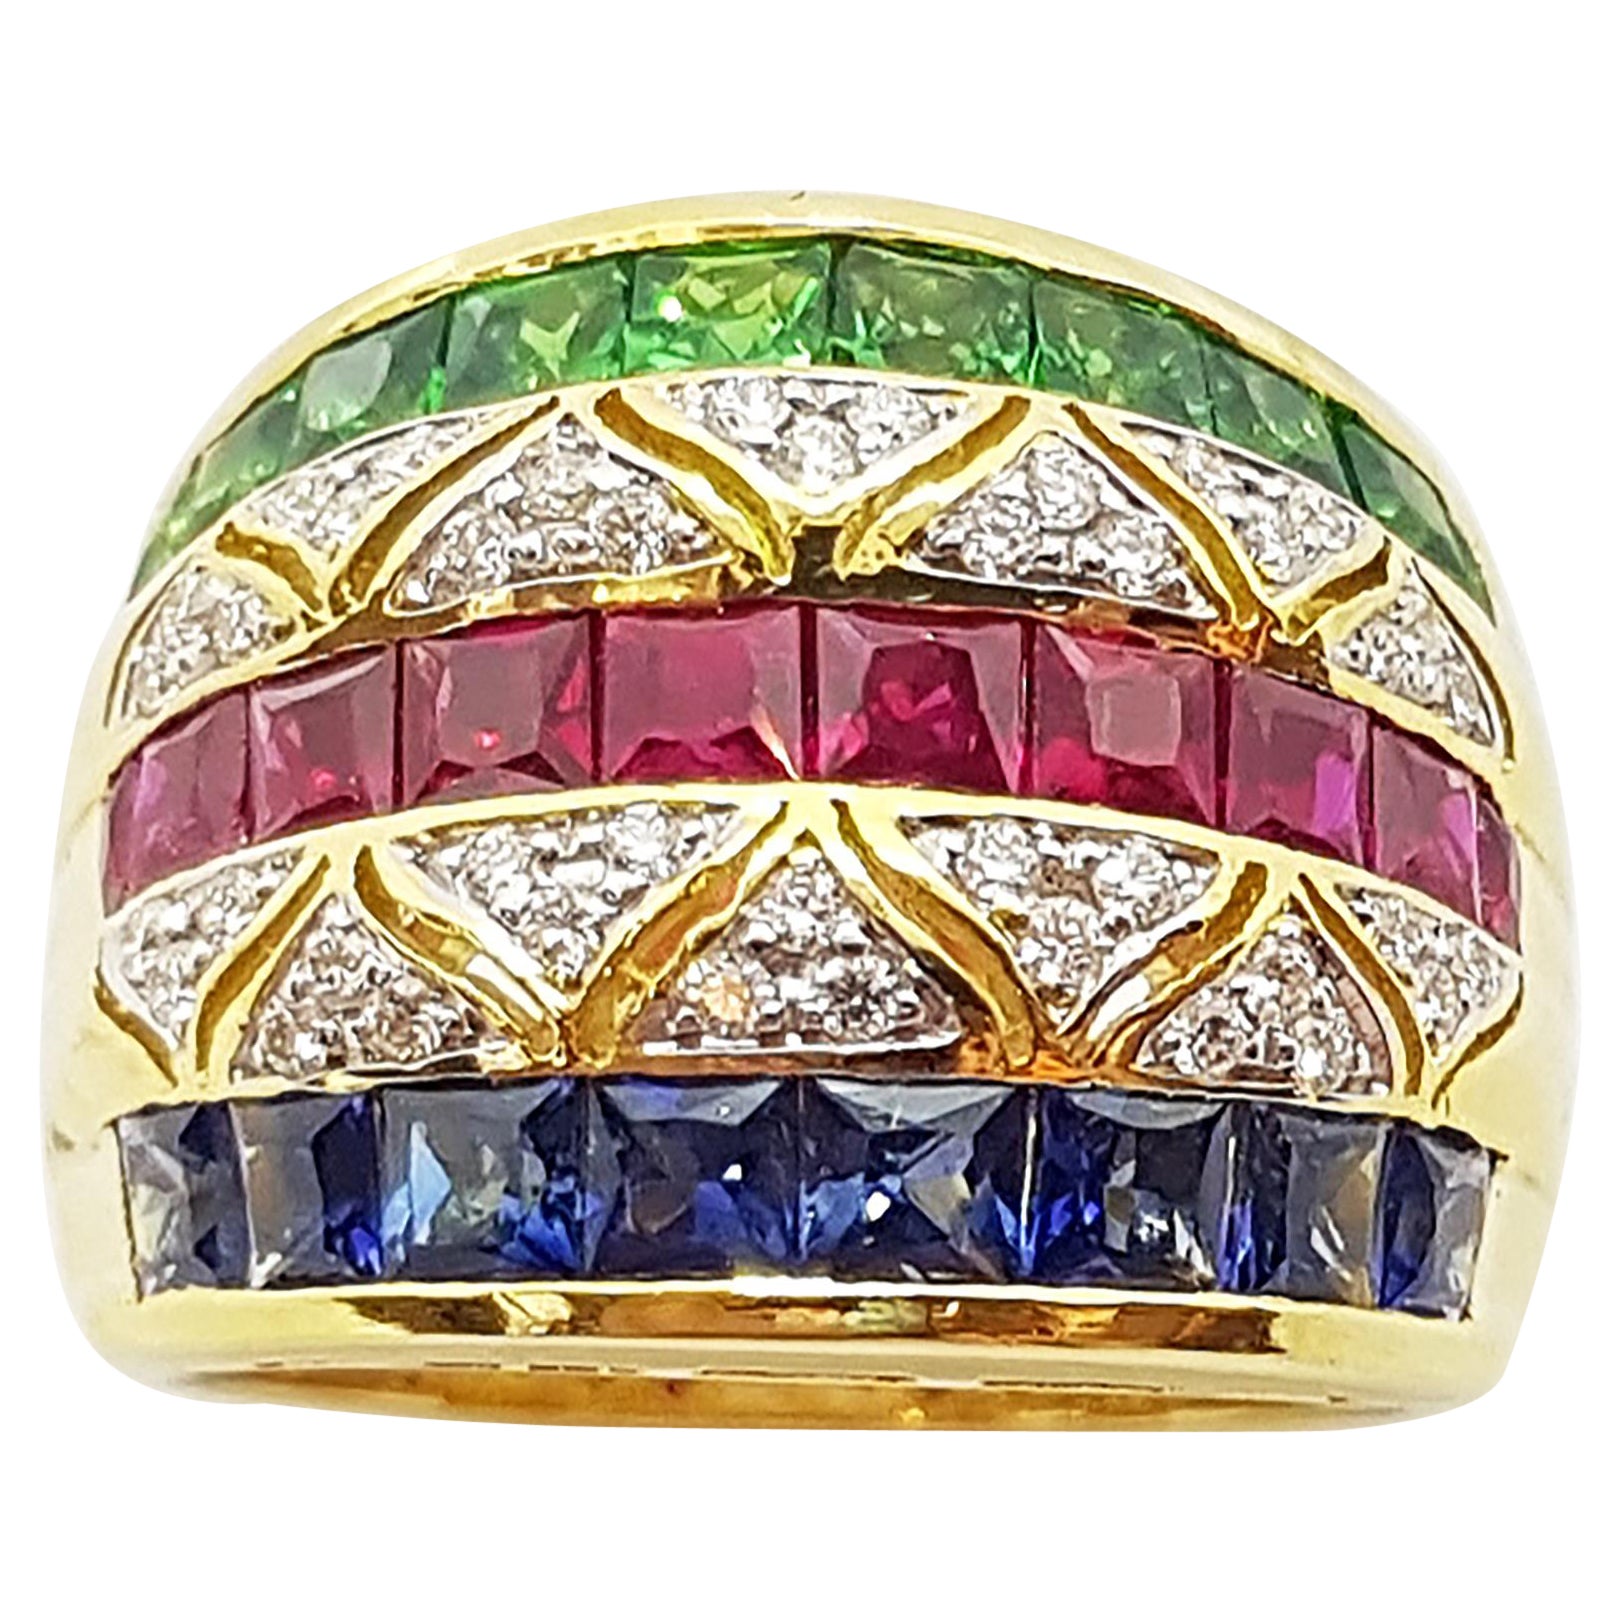 Ruby, Blue Sapphire and Tsavorite with Diamond Ring Set in 18 Karat Gold Setting